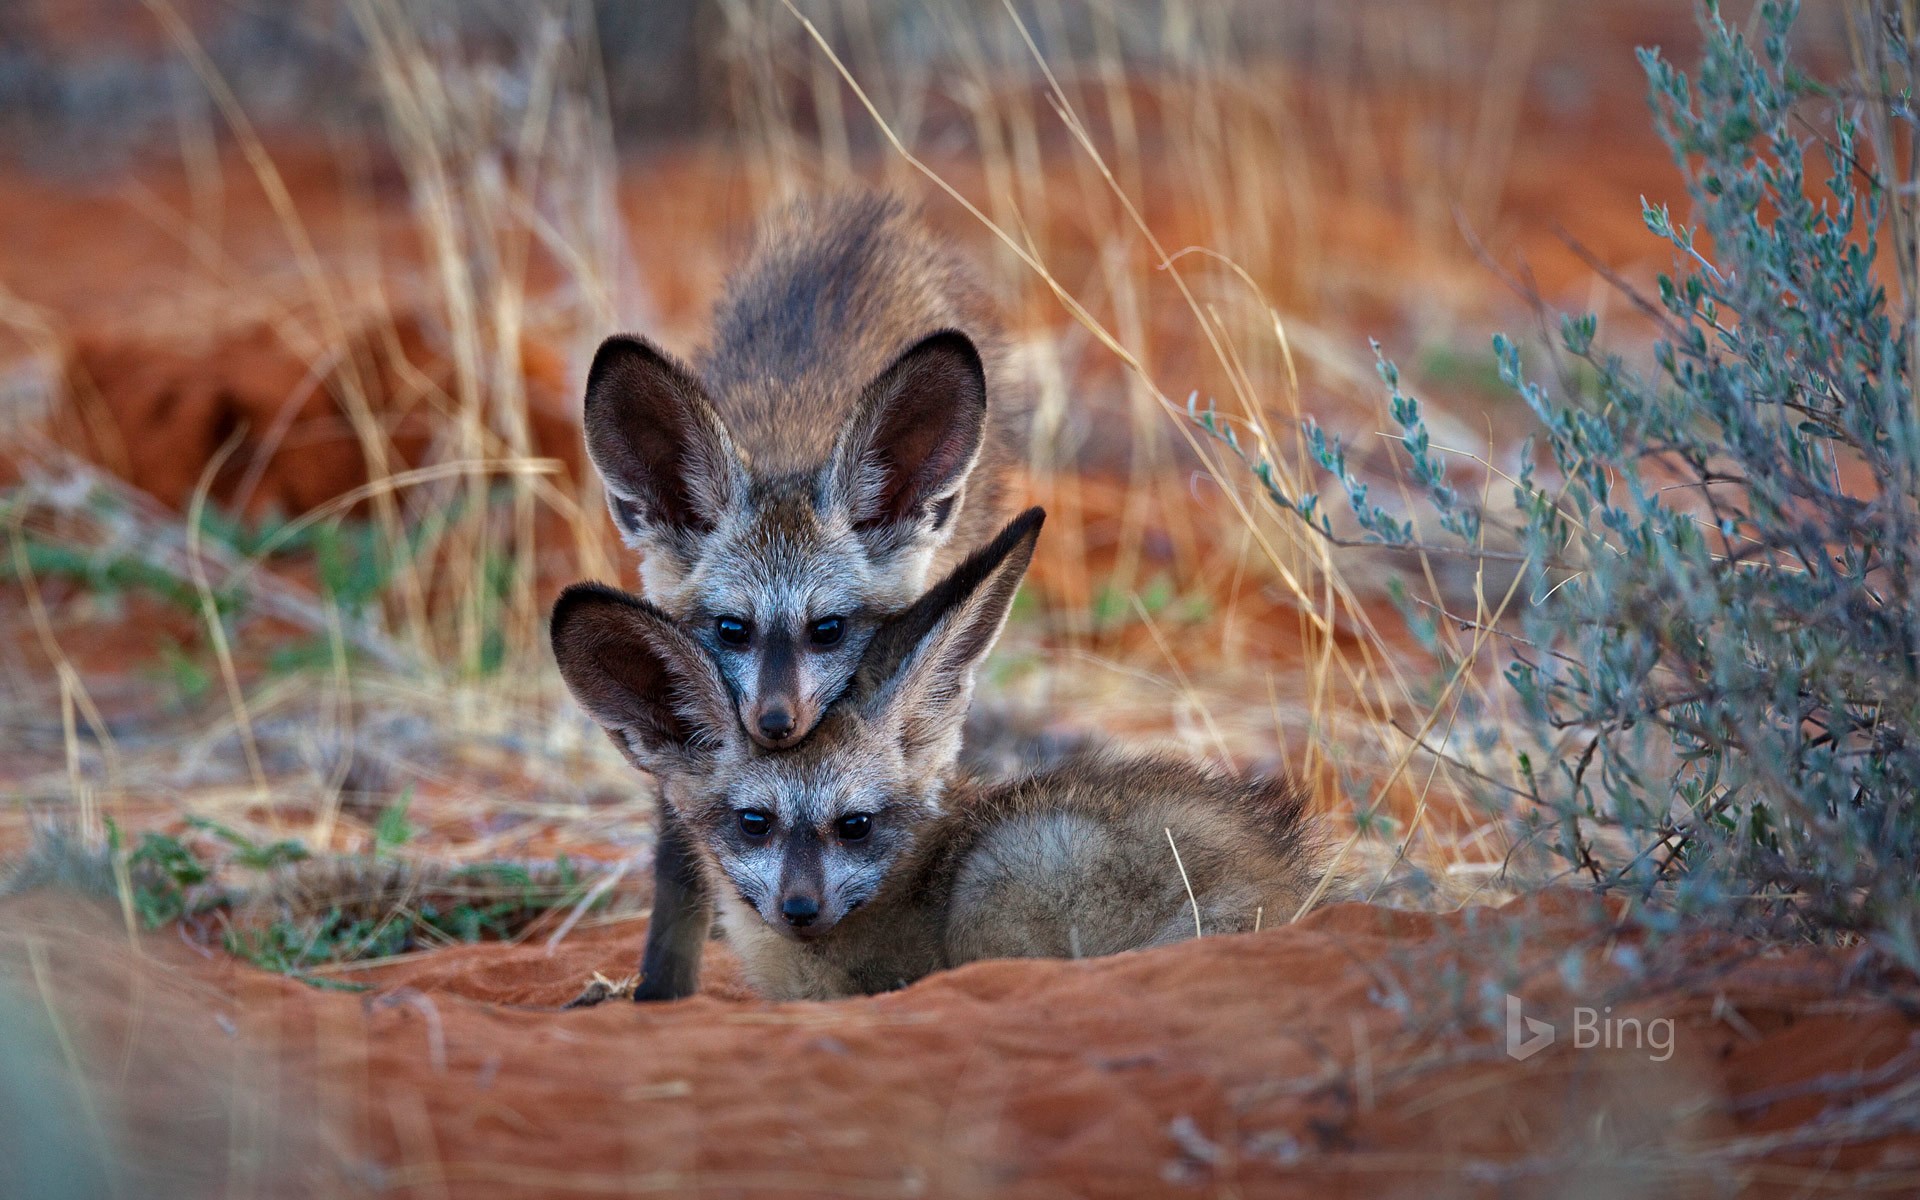 Bat-eared fox kits in Kgalagadi Transfrontier Park, Botswana